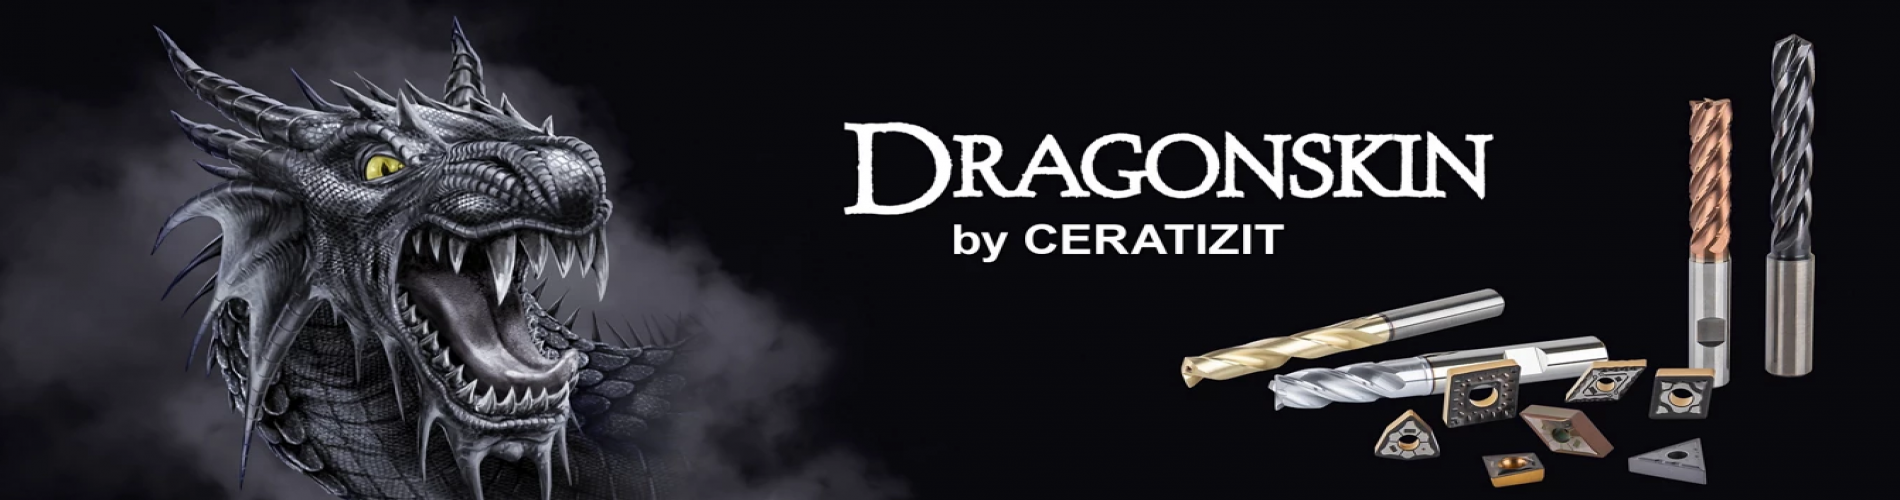 New Dragonskin